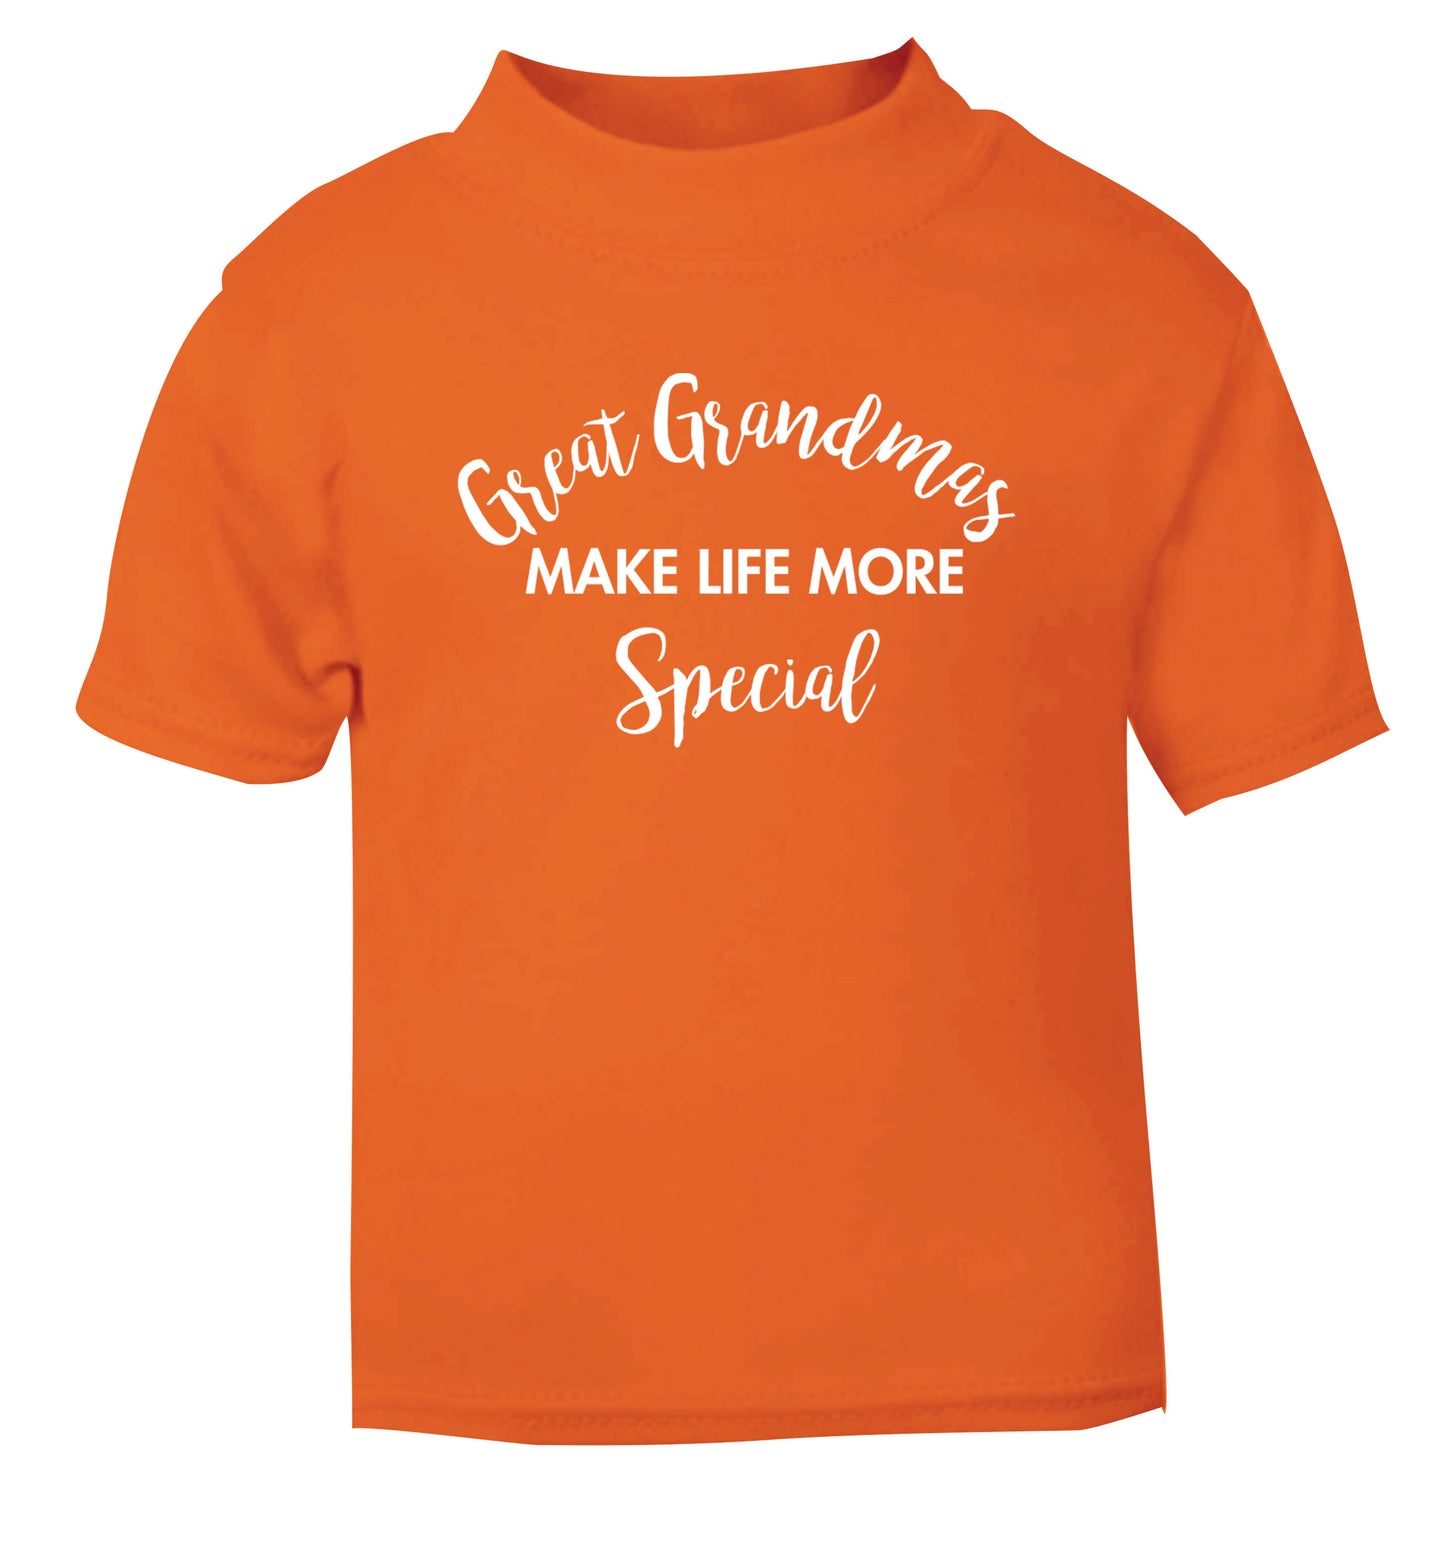 Great Grandmas make life more special orange Baby Toddler Tshirt 2 Years